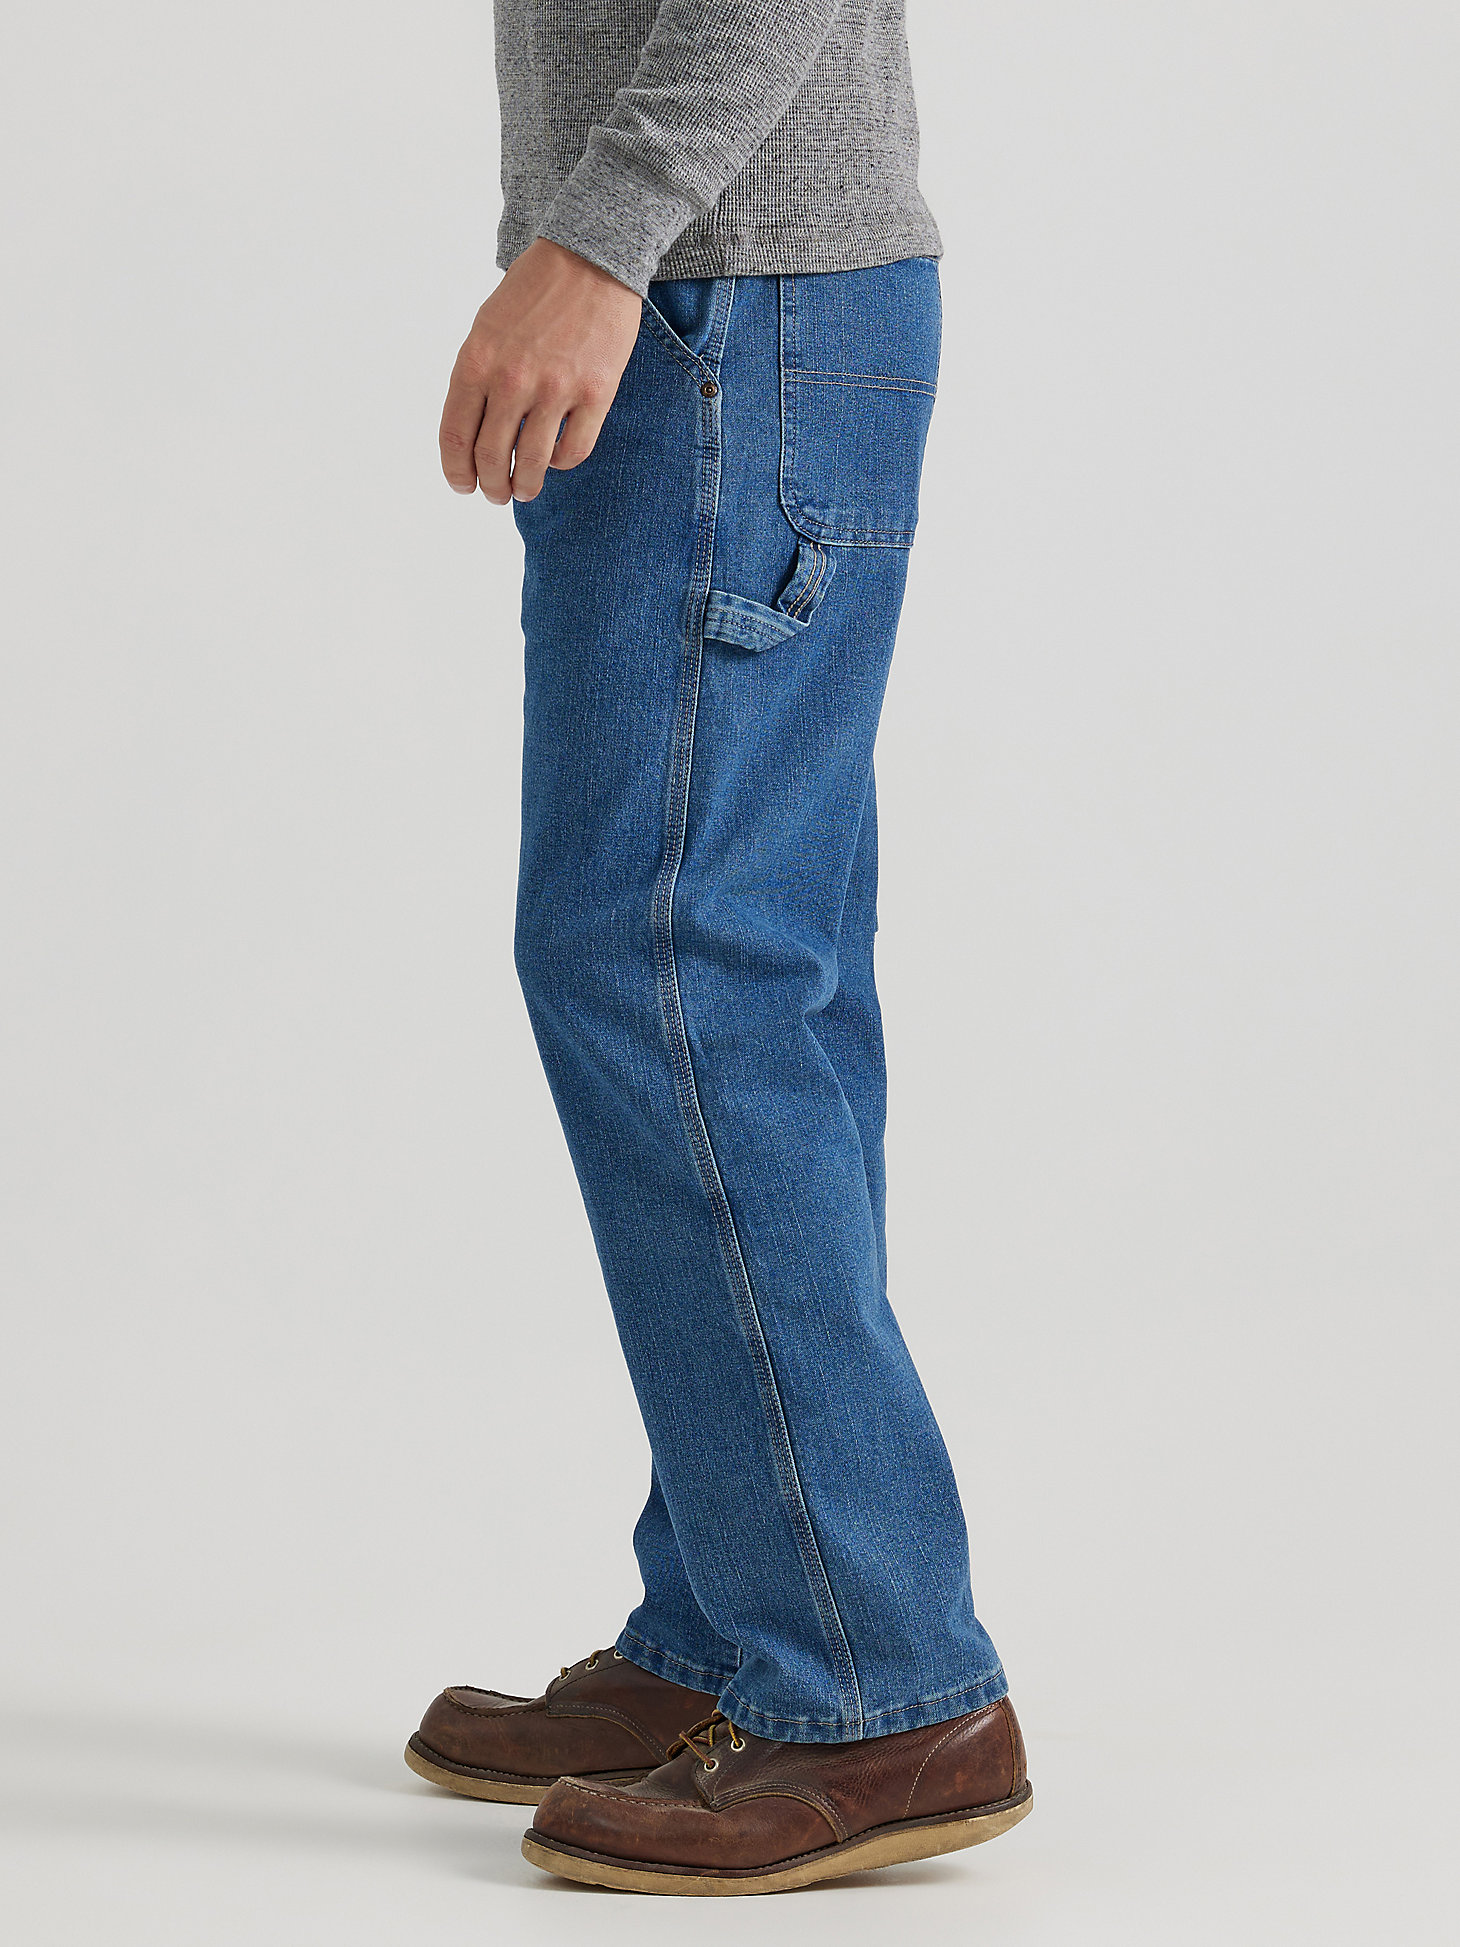 Wrangler® Men's Five Star Premium Carpenter Jean in Mid Indigo alternative view 3